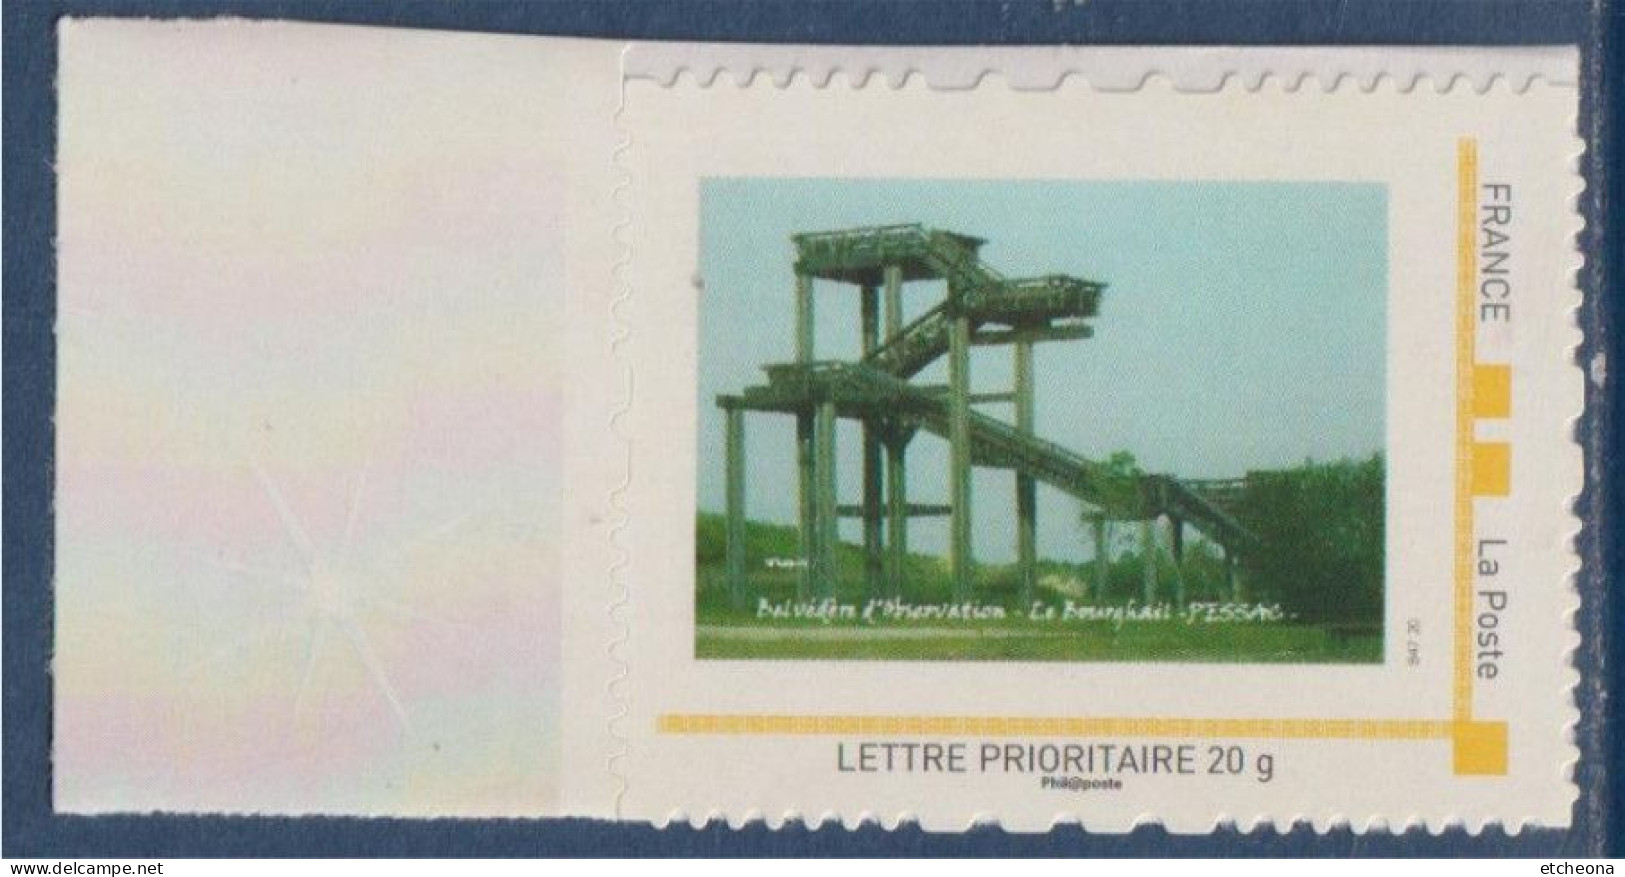 MonTimbraMoi, France -20g Horizontal, Série Nature, Belvédère D'observation Le Bourgailh Pessac, Type Noeud - Unused Stamps